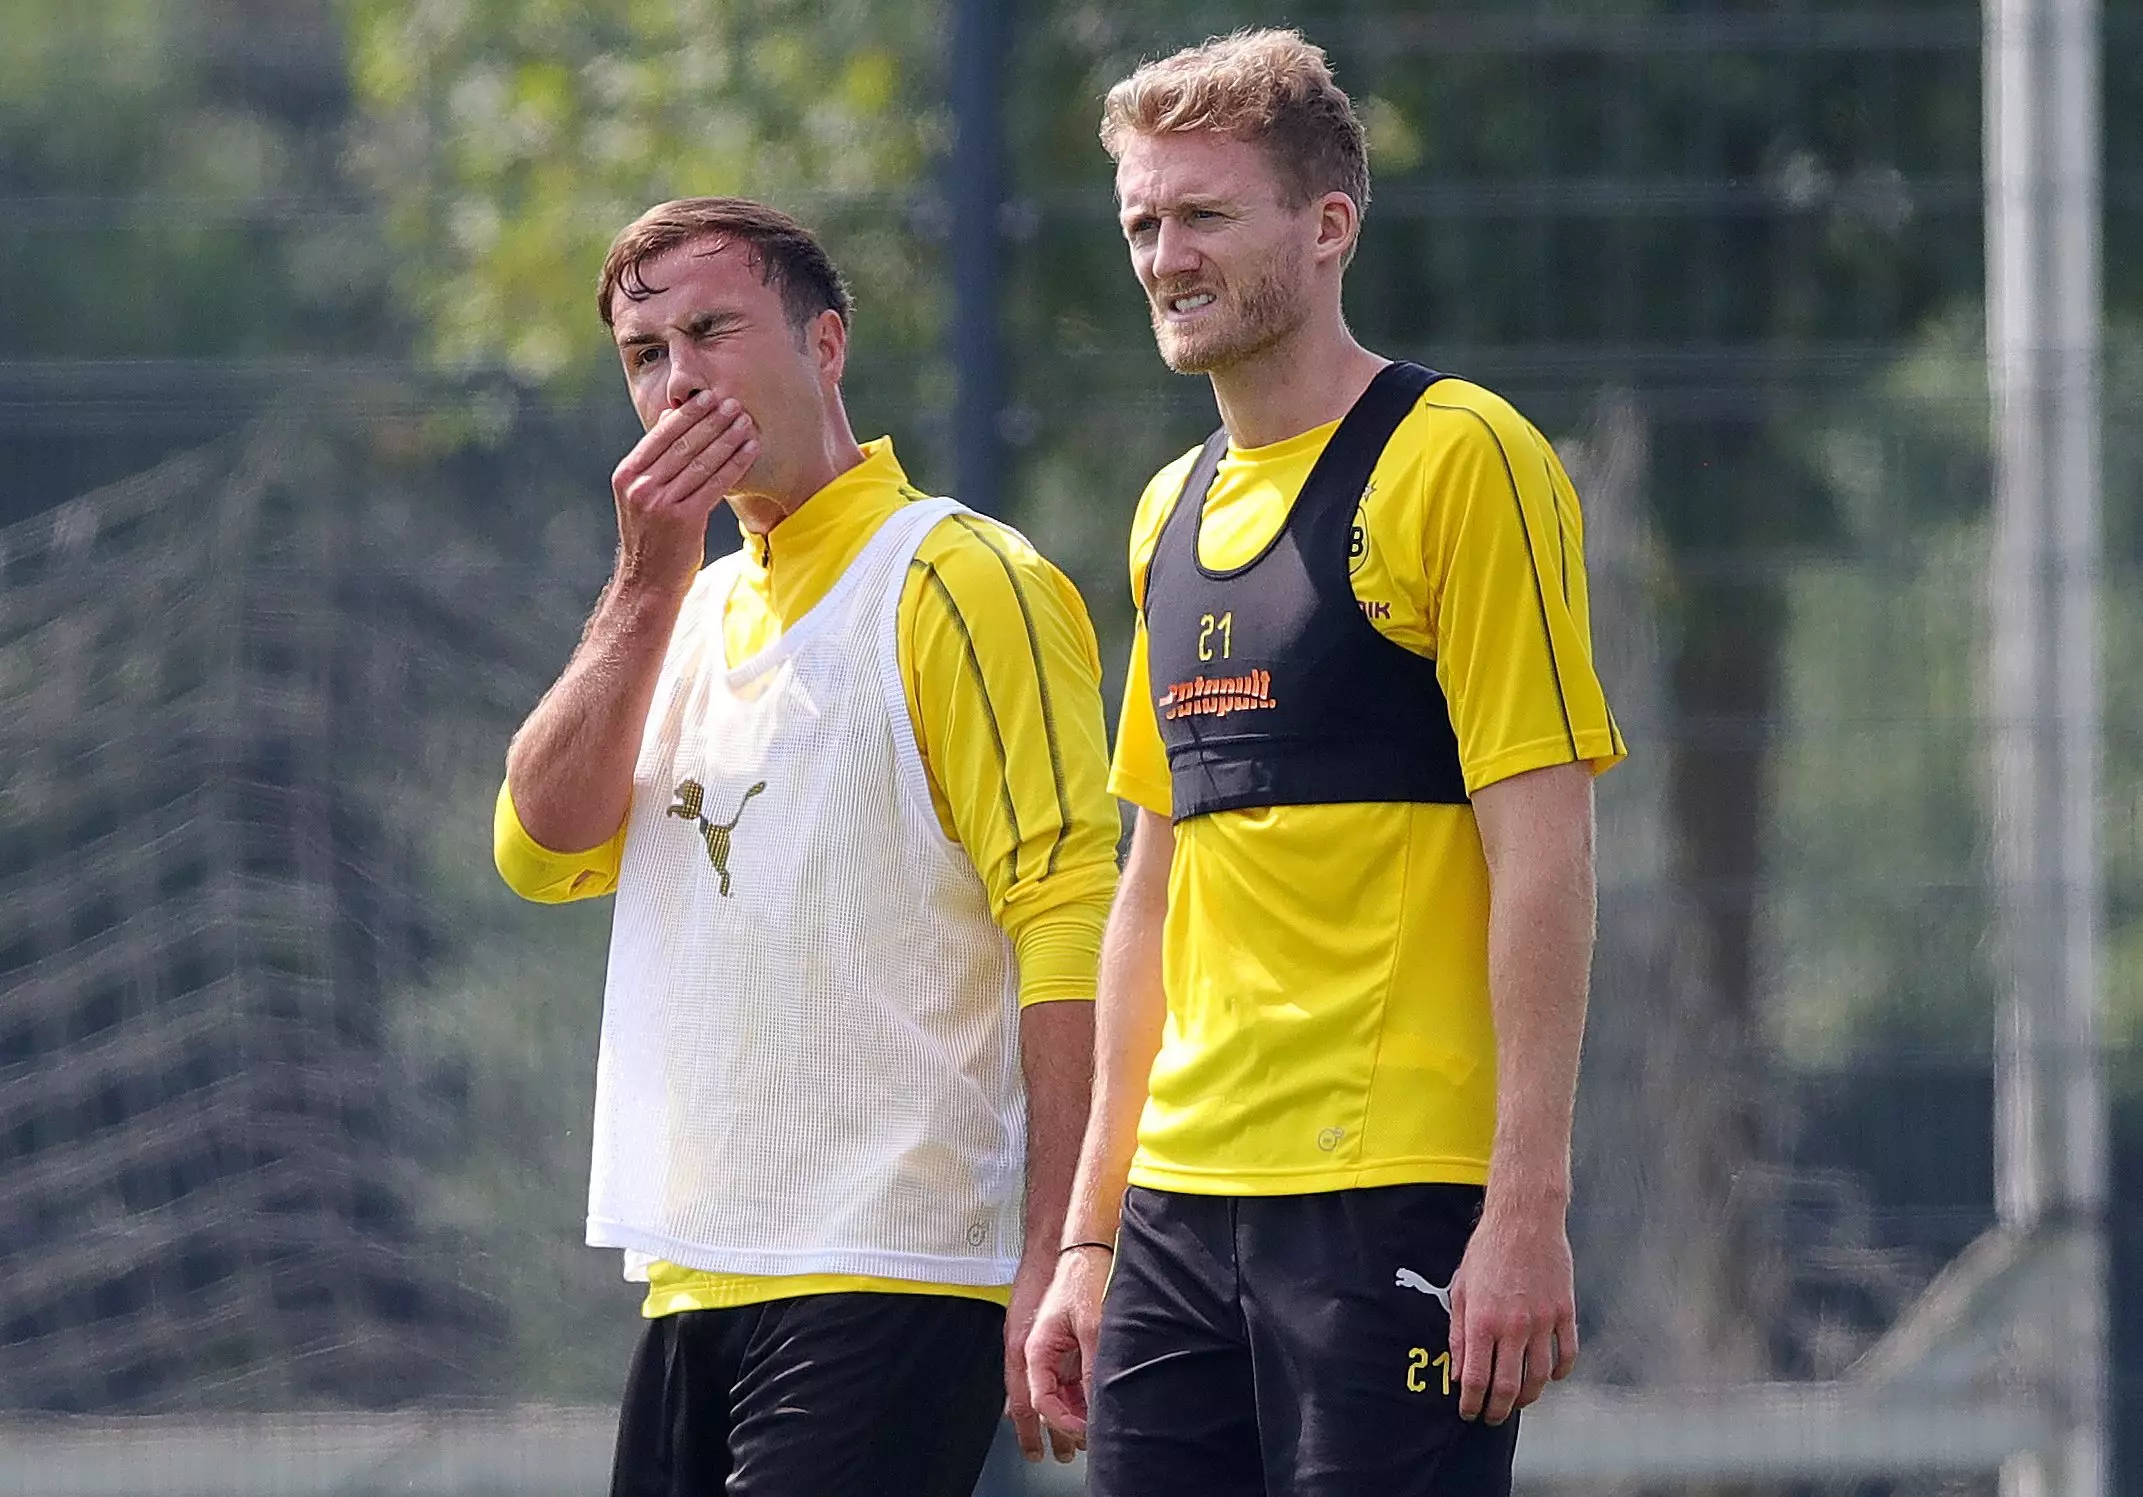 Gotze and Schurrle were teammates at Borussia Dortmund too.